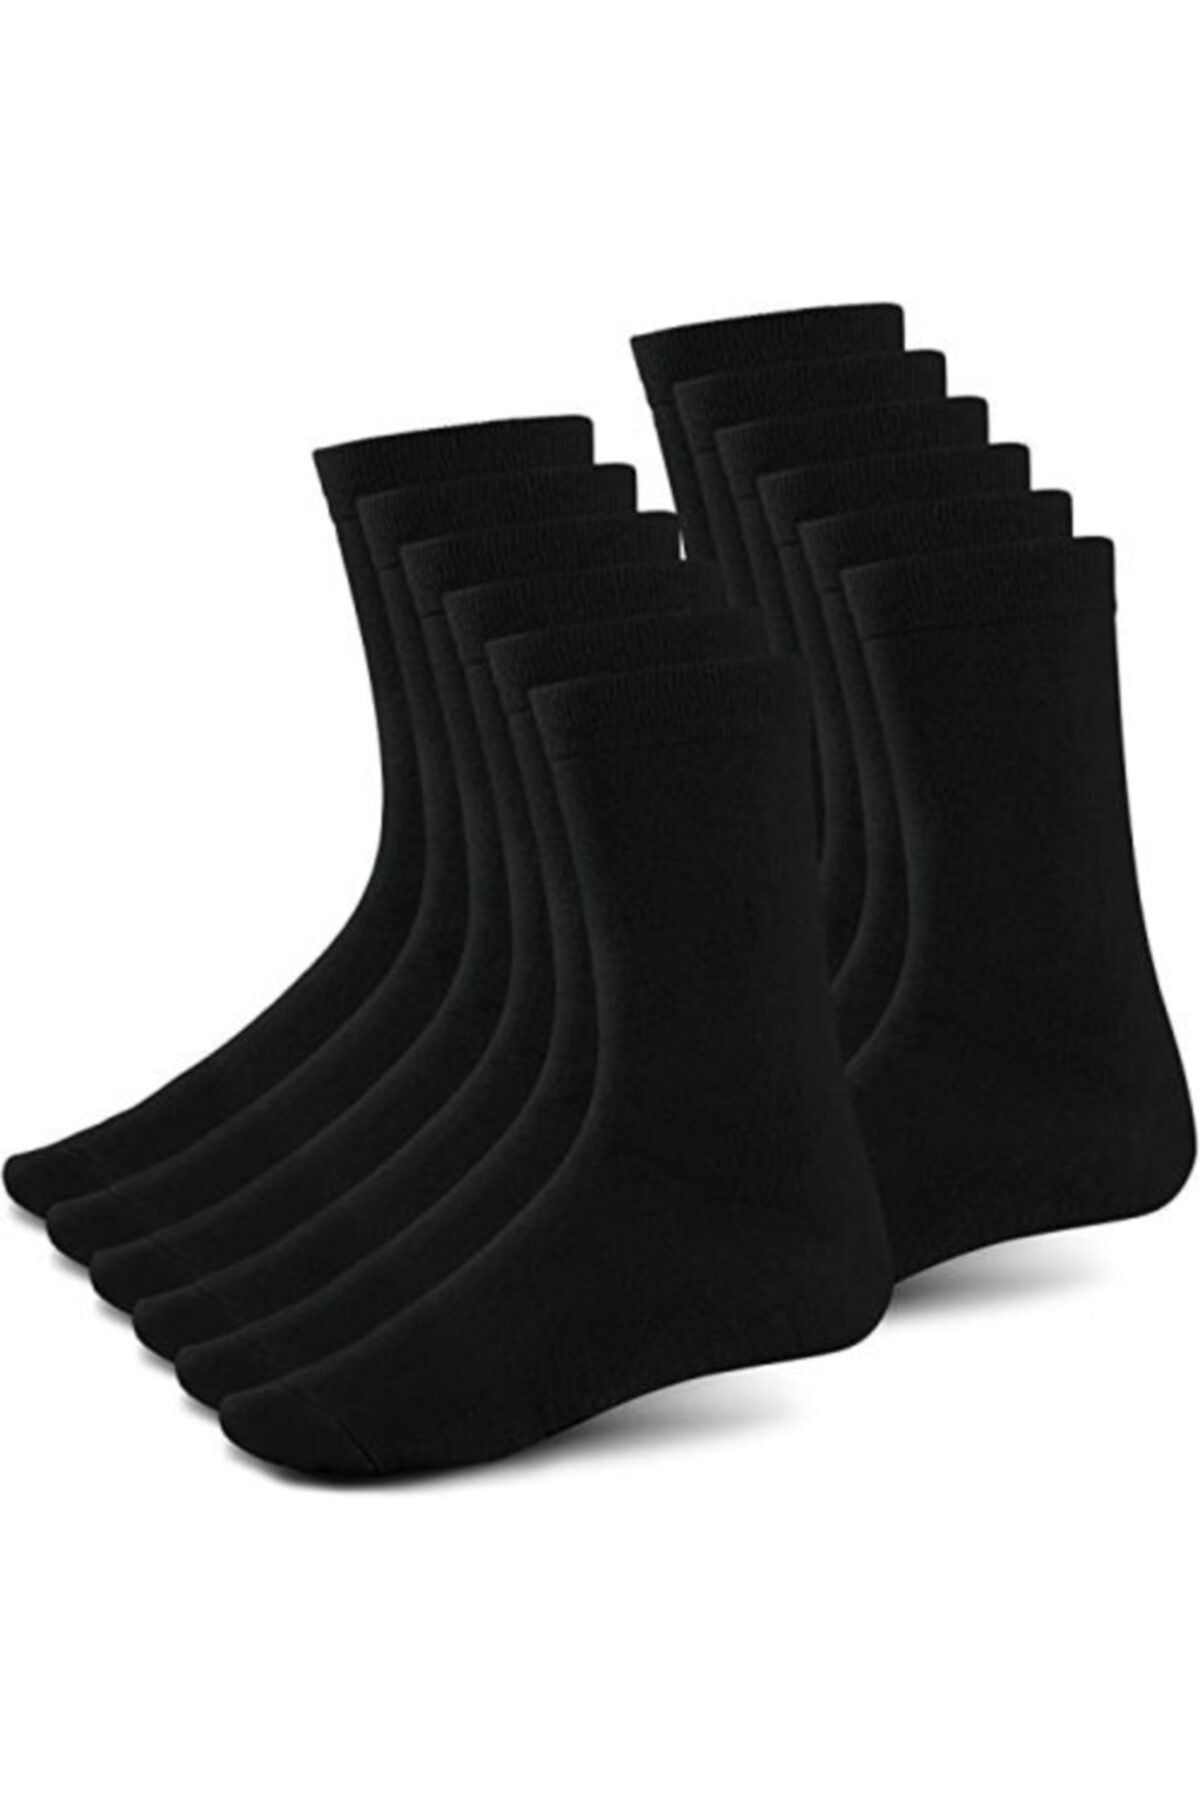 BGK 10 Çift Unisex Bambu Siyah Soket Çorap